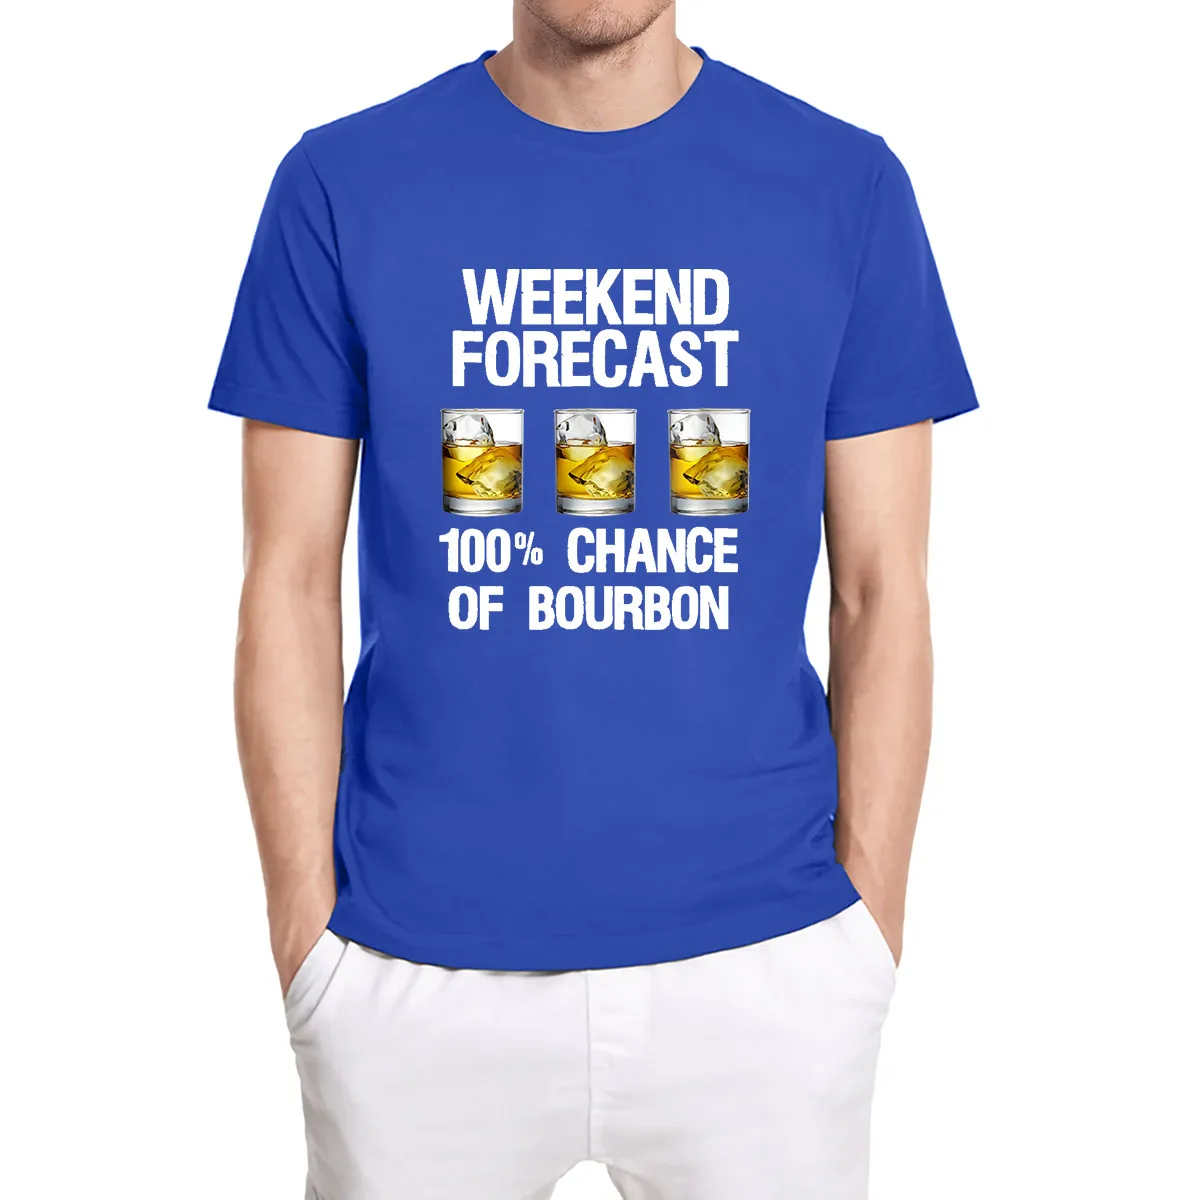 

Bourbon Of Forecast Tee Weekend Vintage 100% Chance Drinking Vintage Funny T Shirt Men's Short Sleeve T-shirt Harajuku Tops Tee